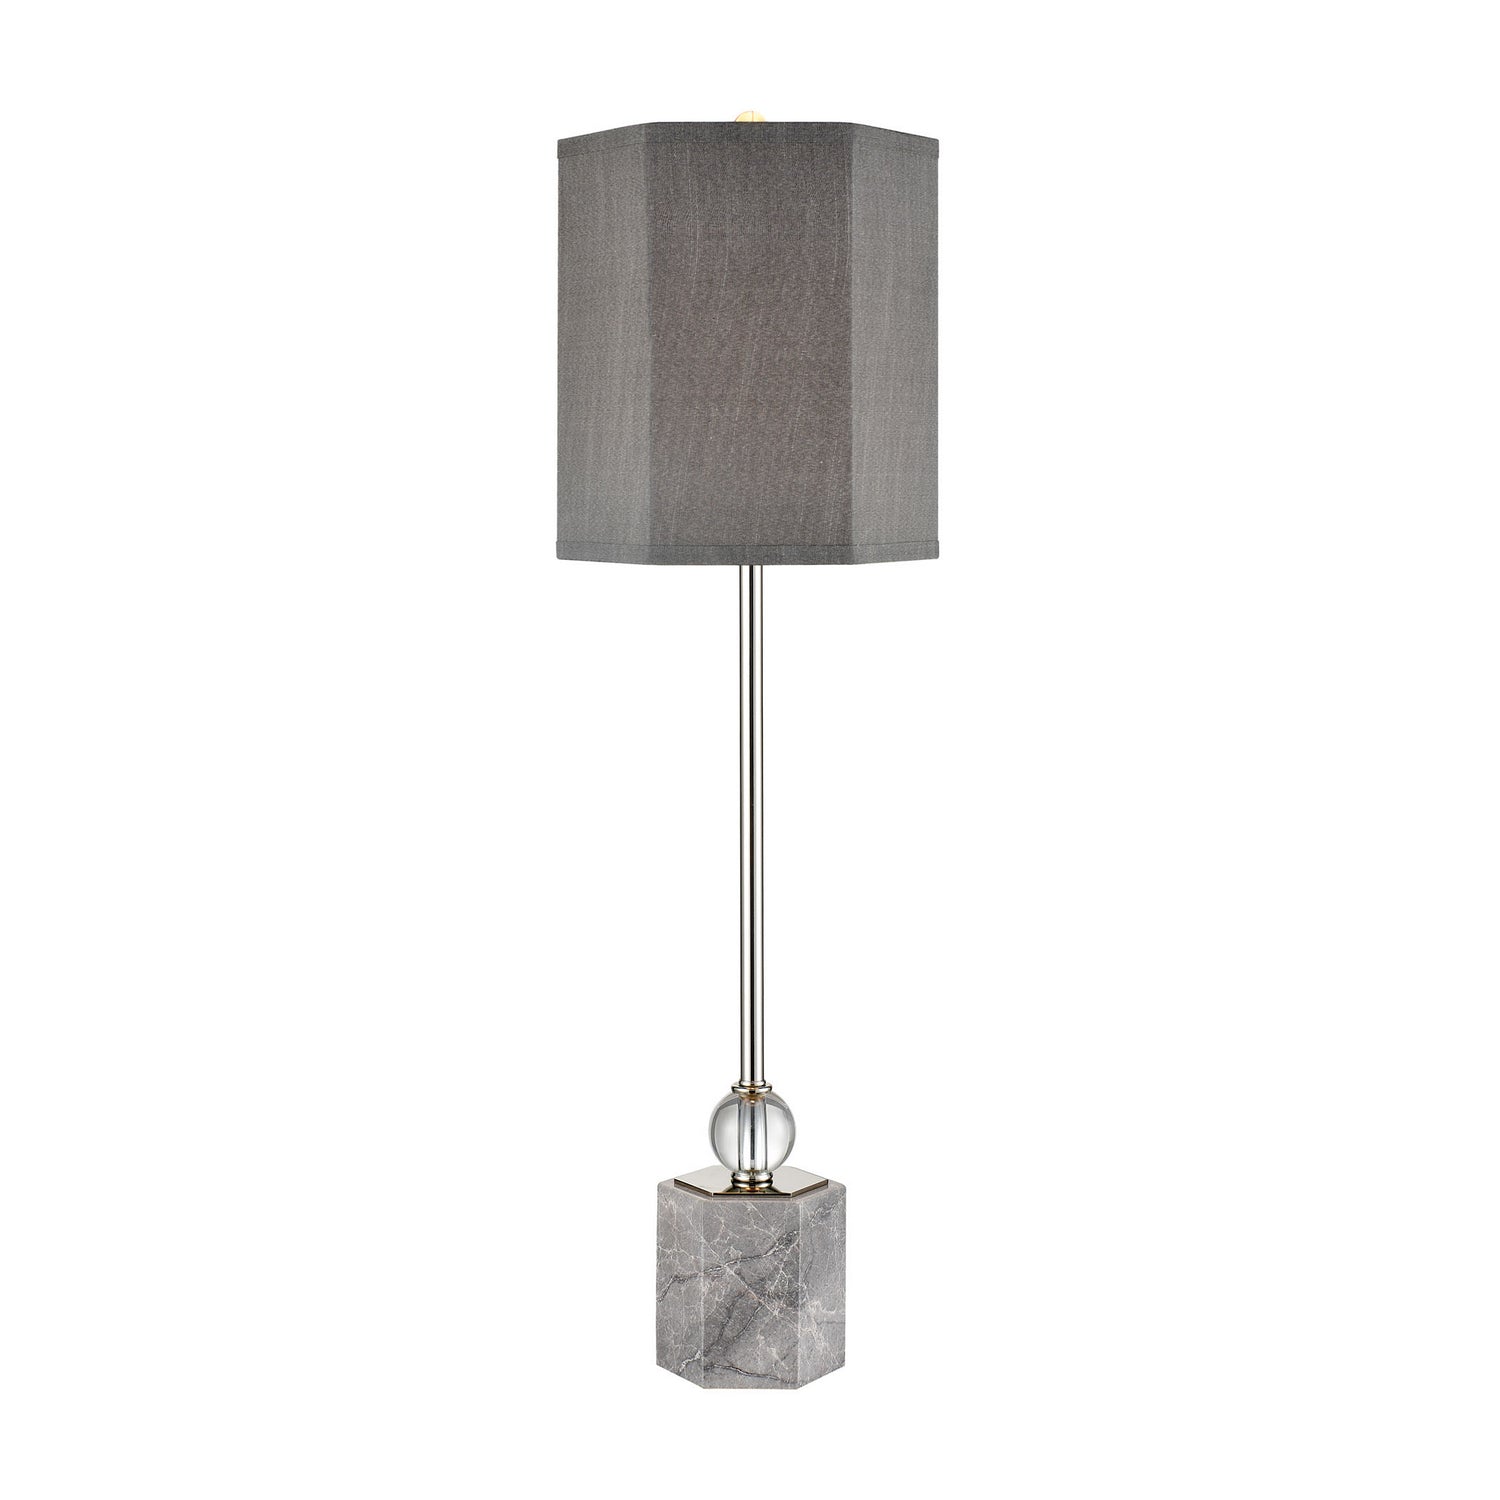 ELK Home - D4121 - One Light Table Lamp - Discretion - Polished Nickel